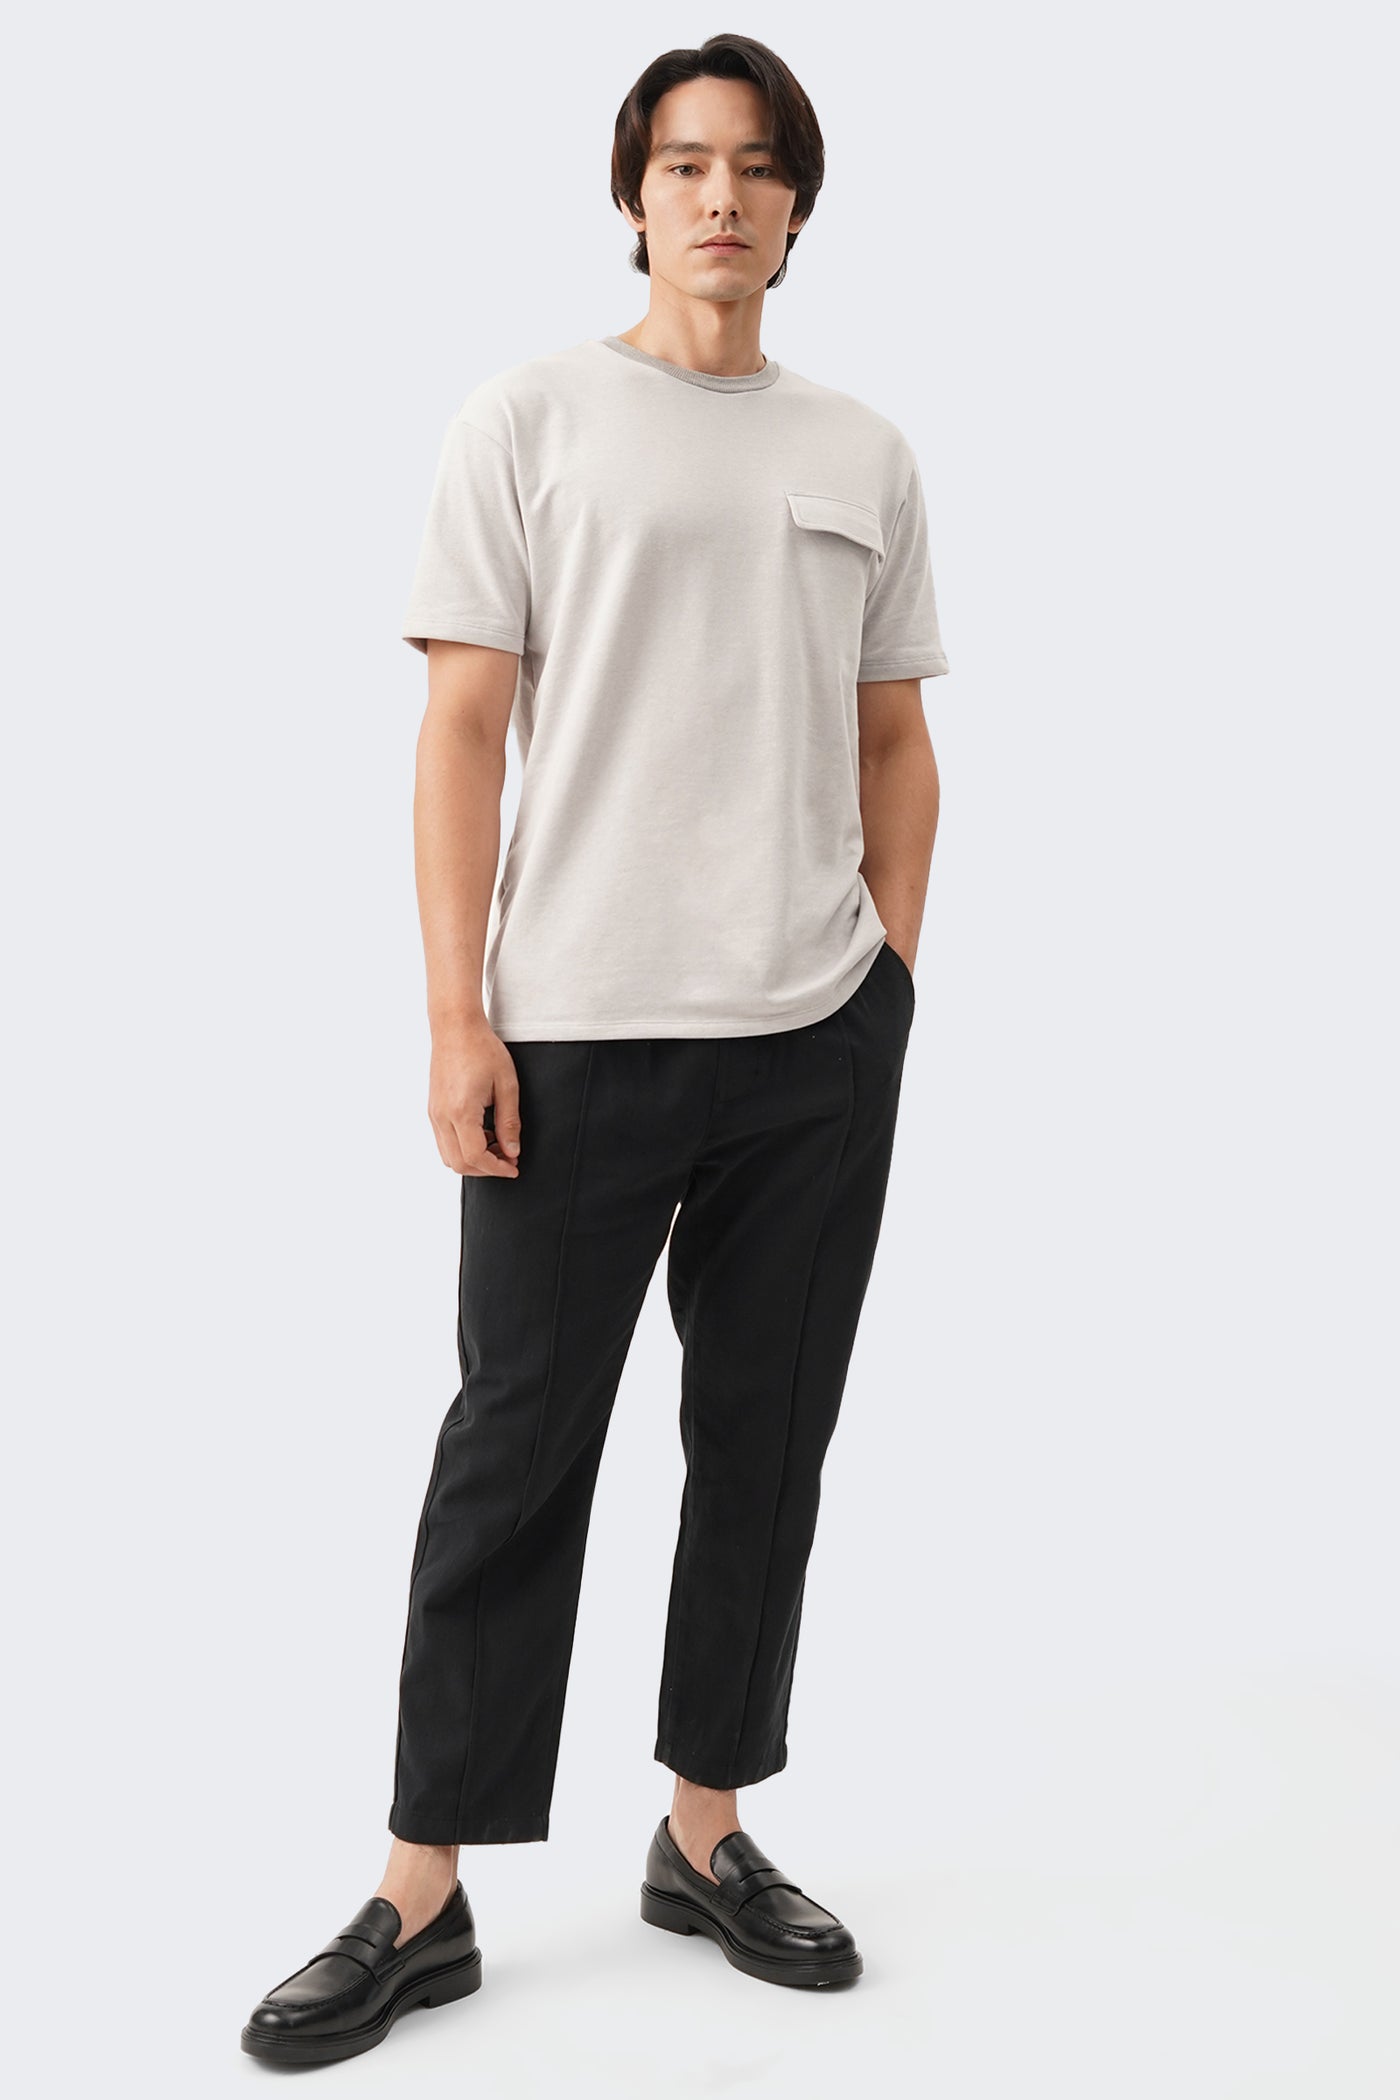 Unisex Crew T-Shirt with Flap Pocket